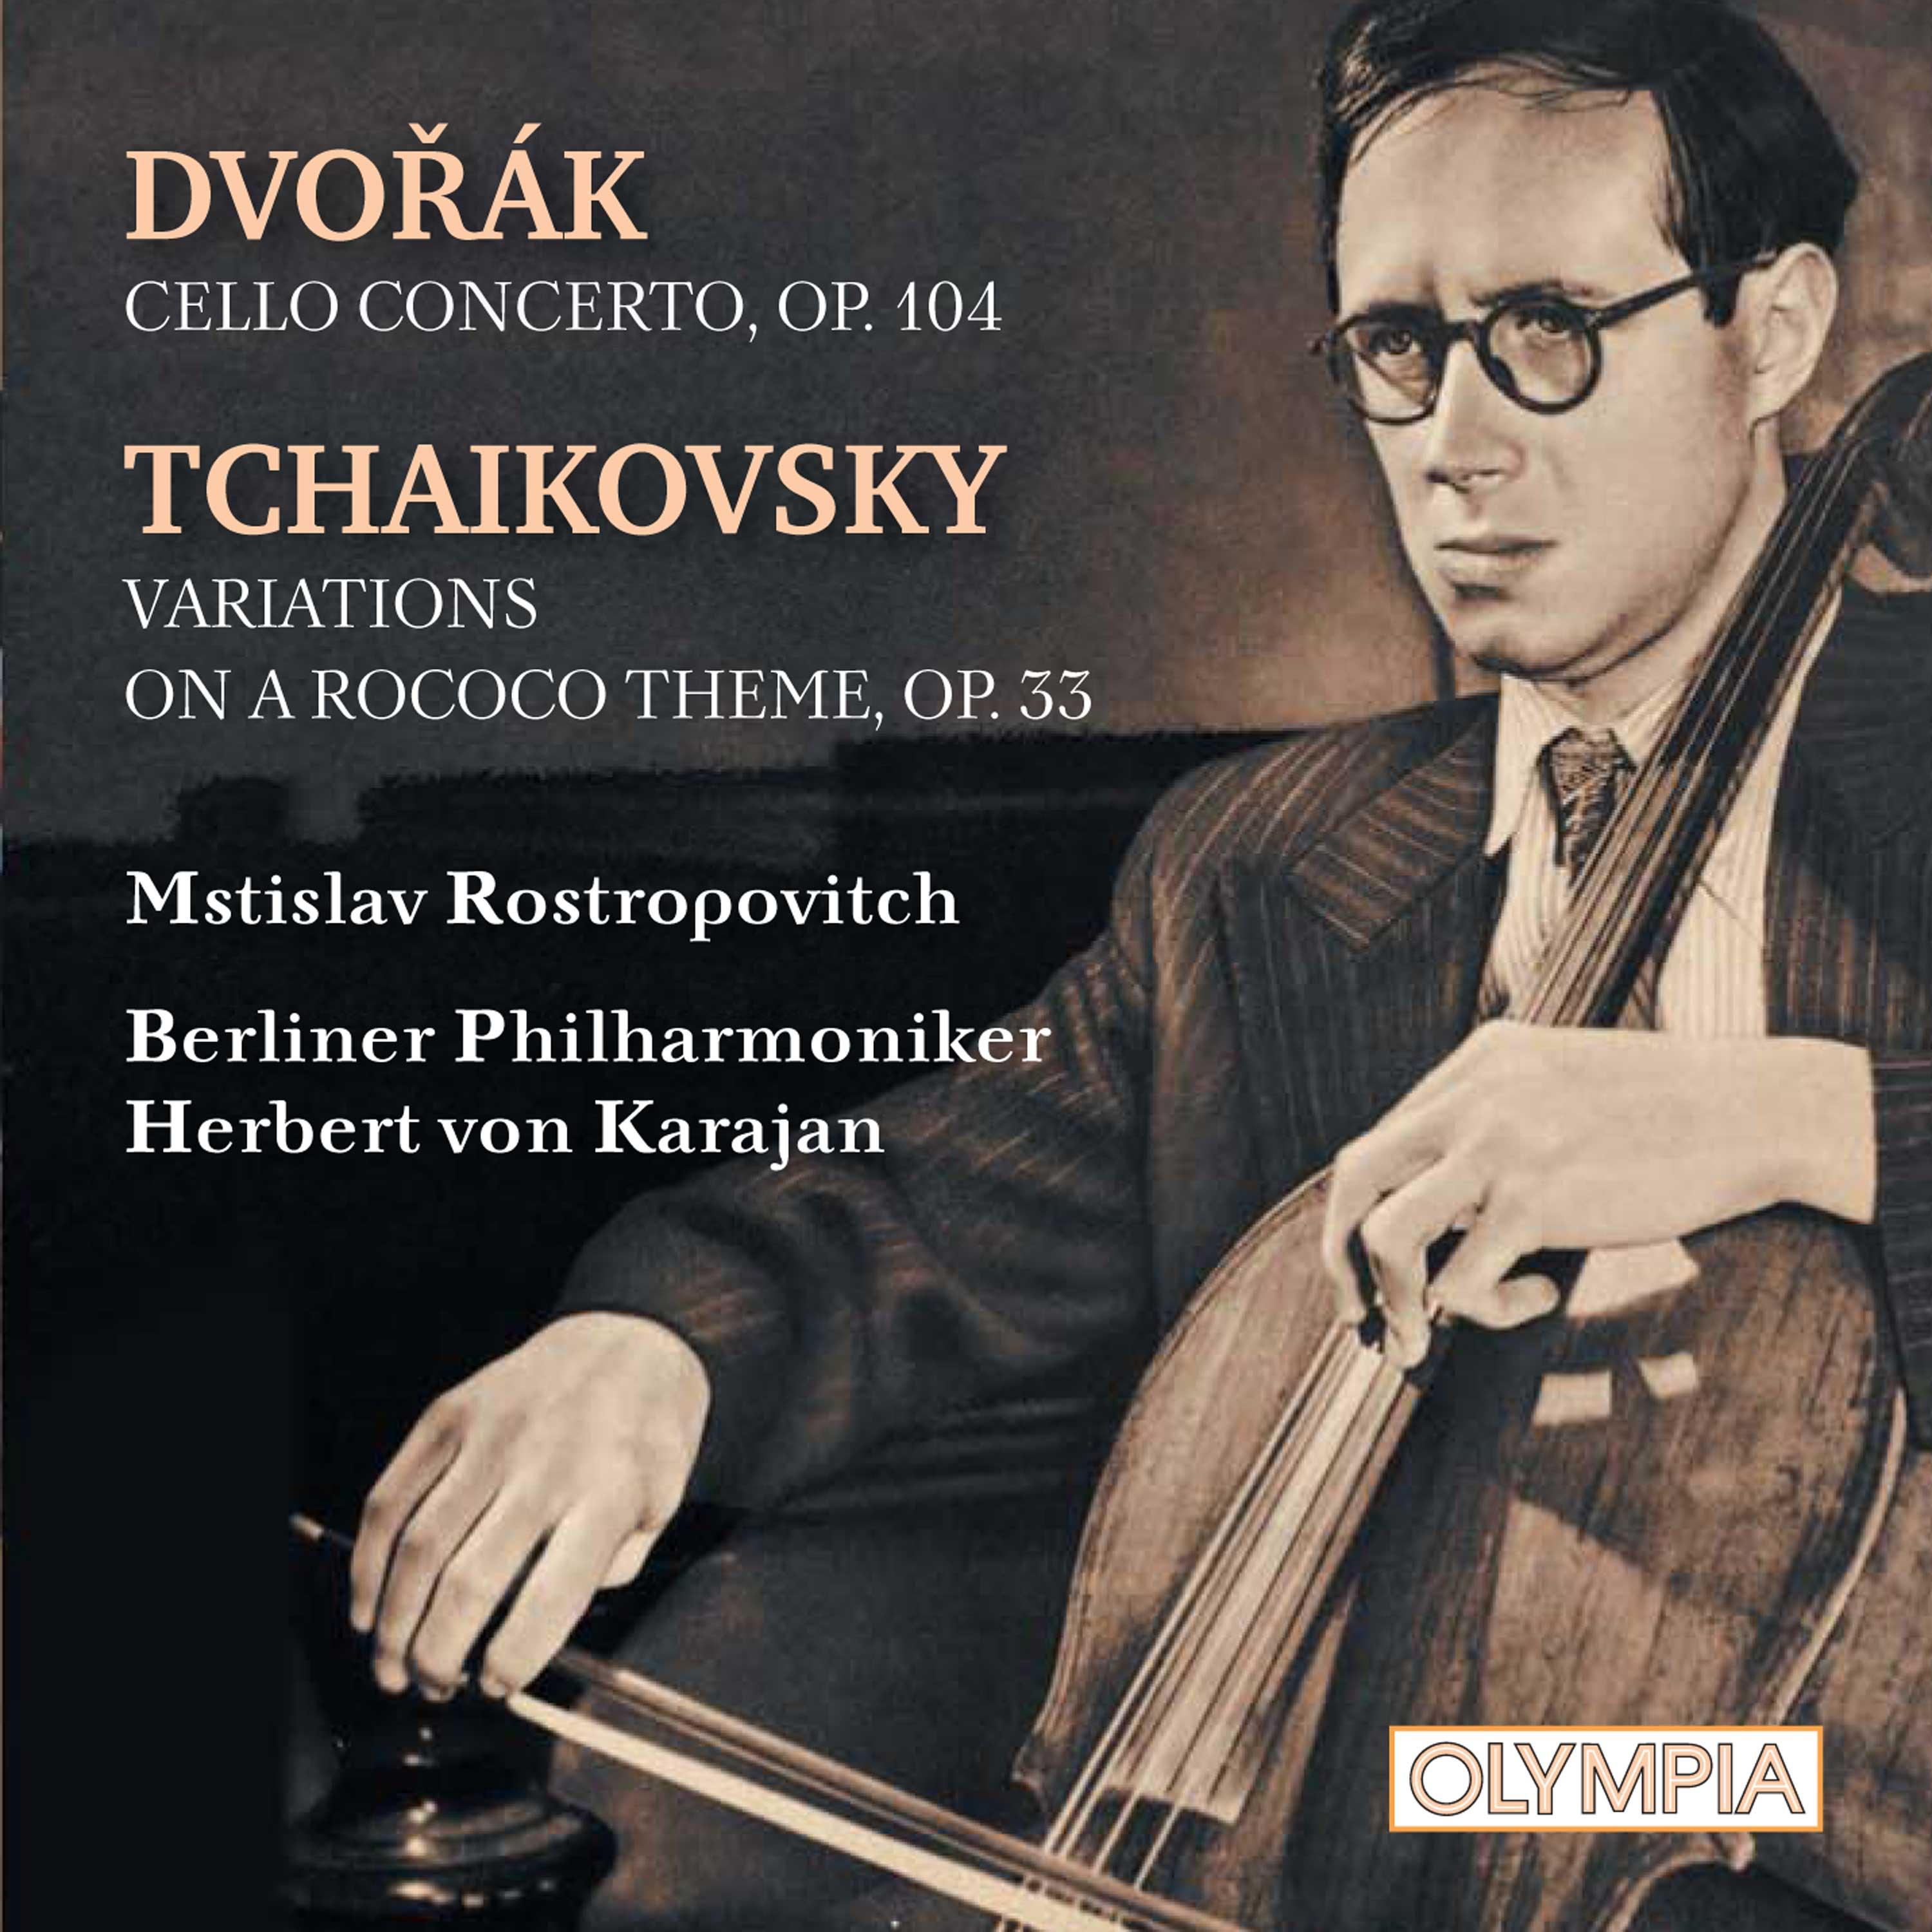 Dvoa k: Cello Concerto  Tchaikovsky: Variations On A Rococo Theme